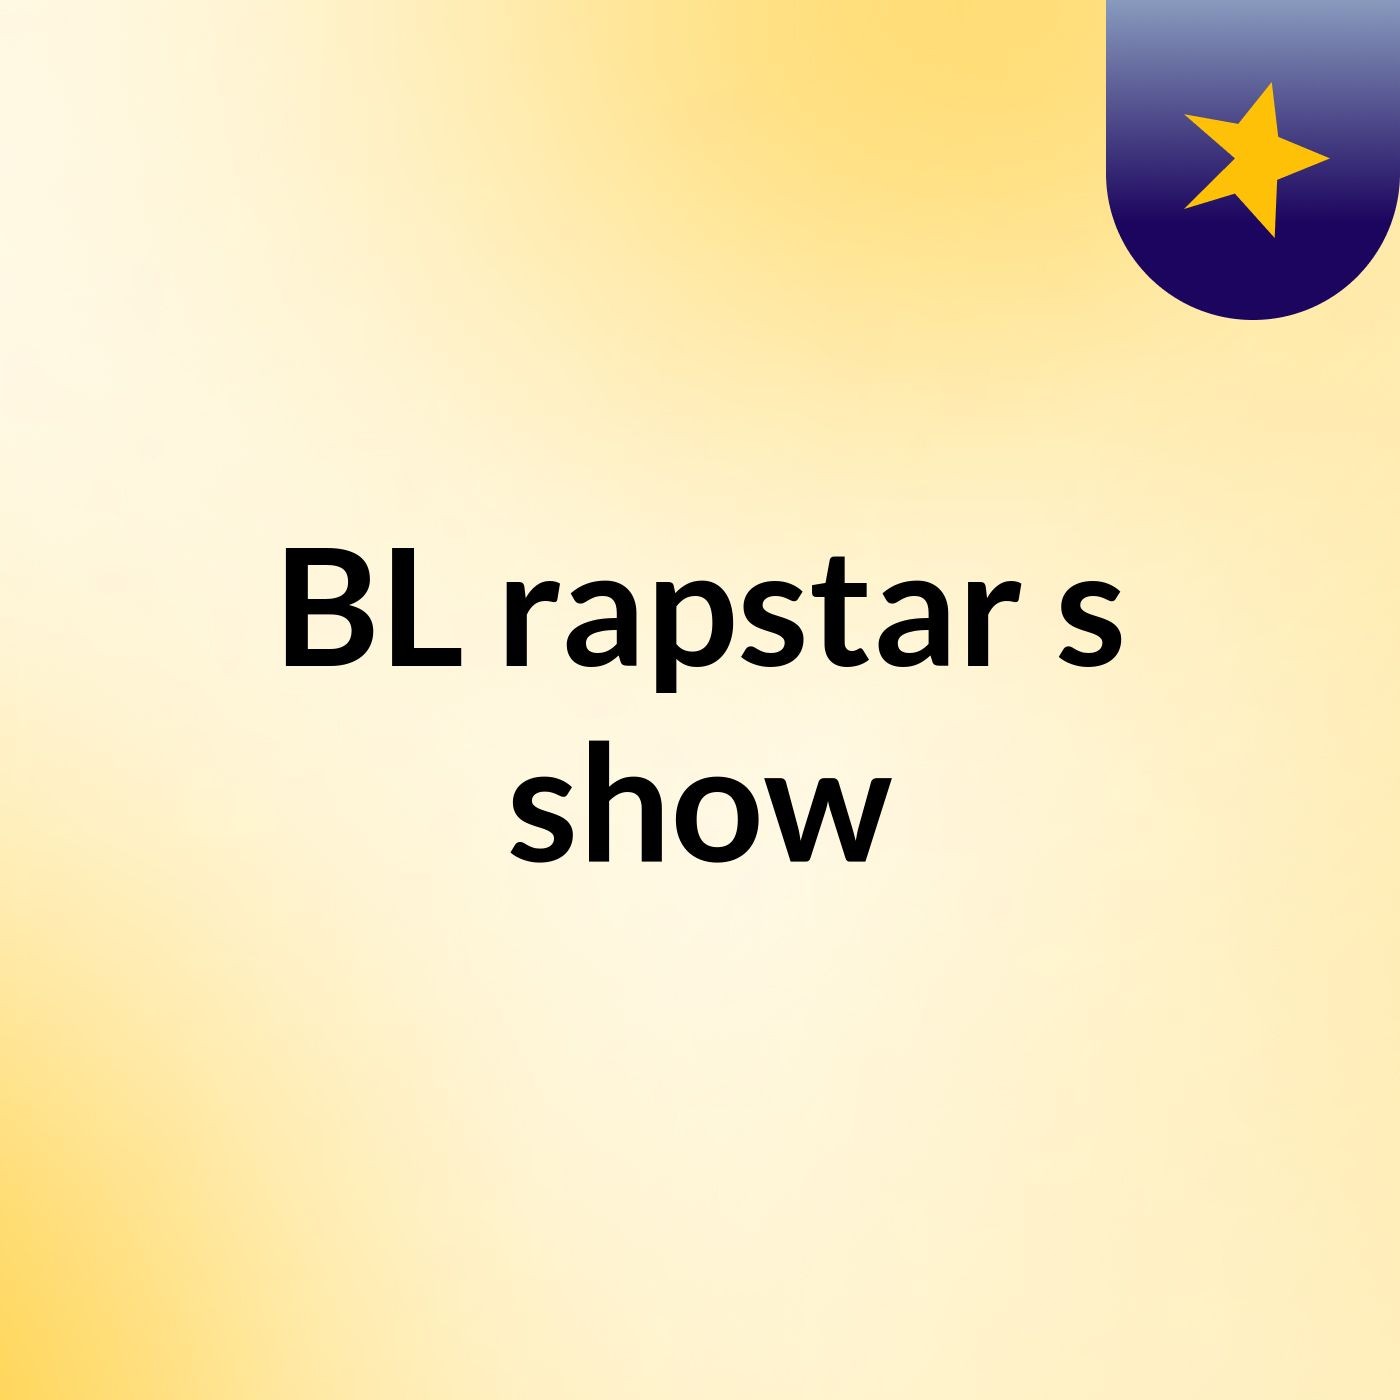 BL rapstar's show